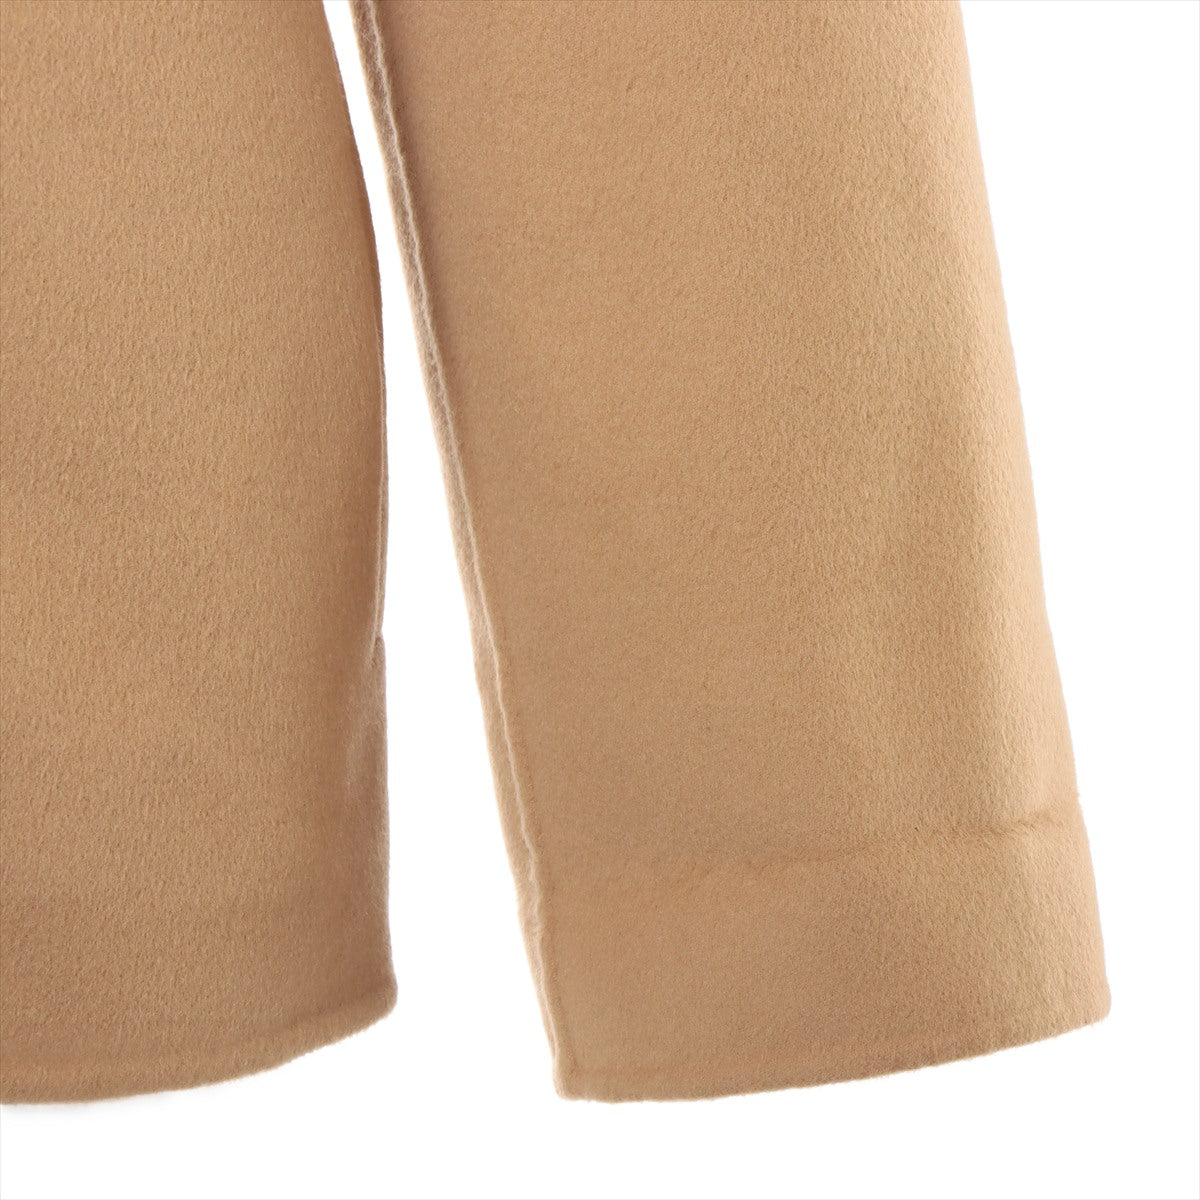 Louis Vuitton 22AW Wool & silk Short coat 36 Ladies' Brown  Monogram double face wrap coat belted RW222W